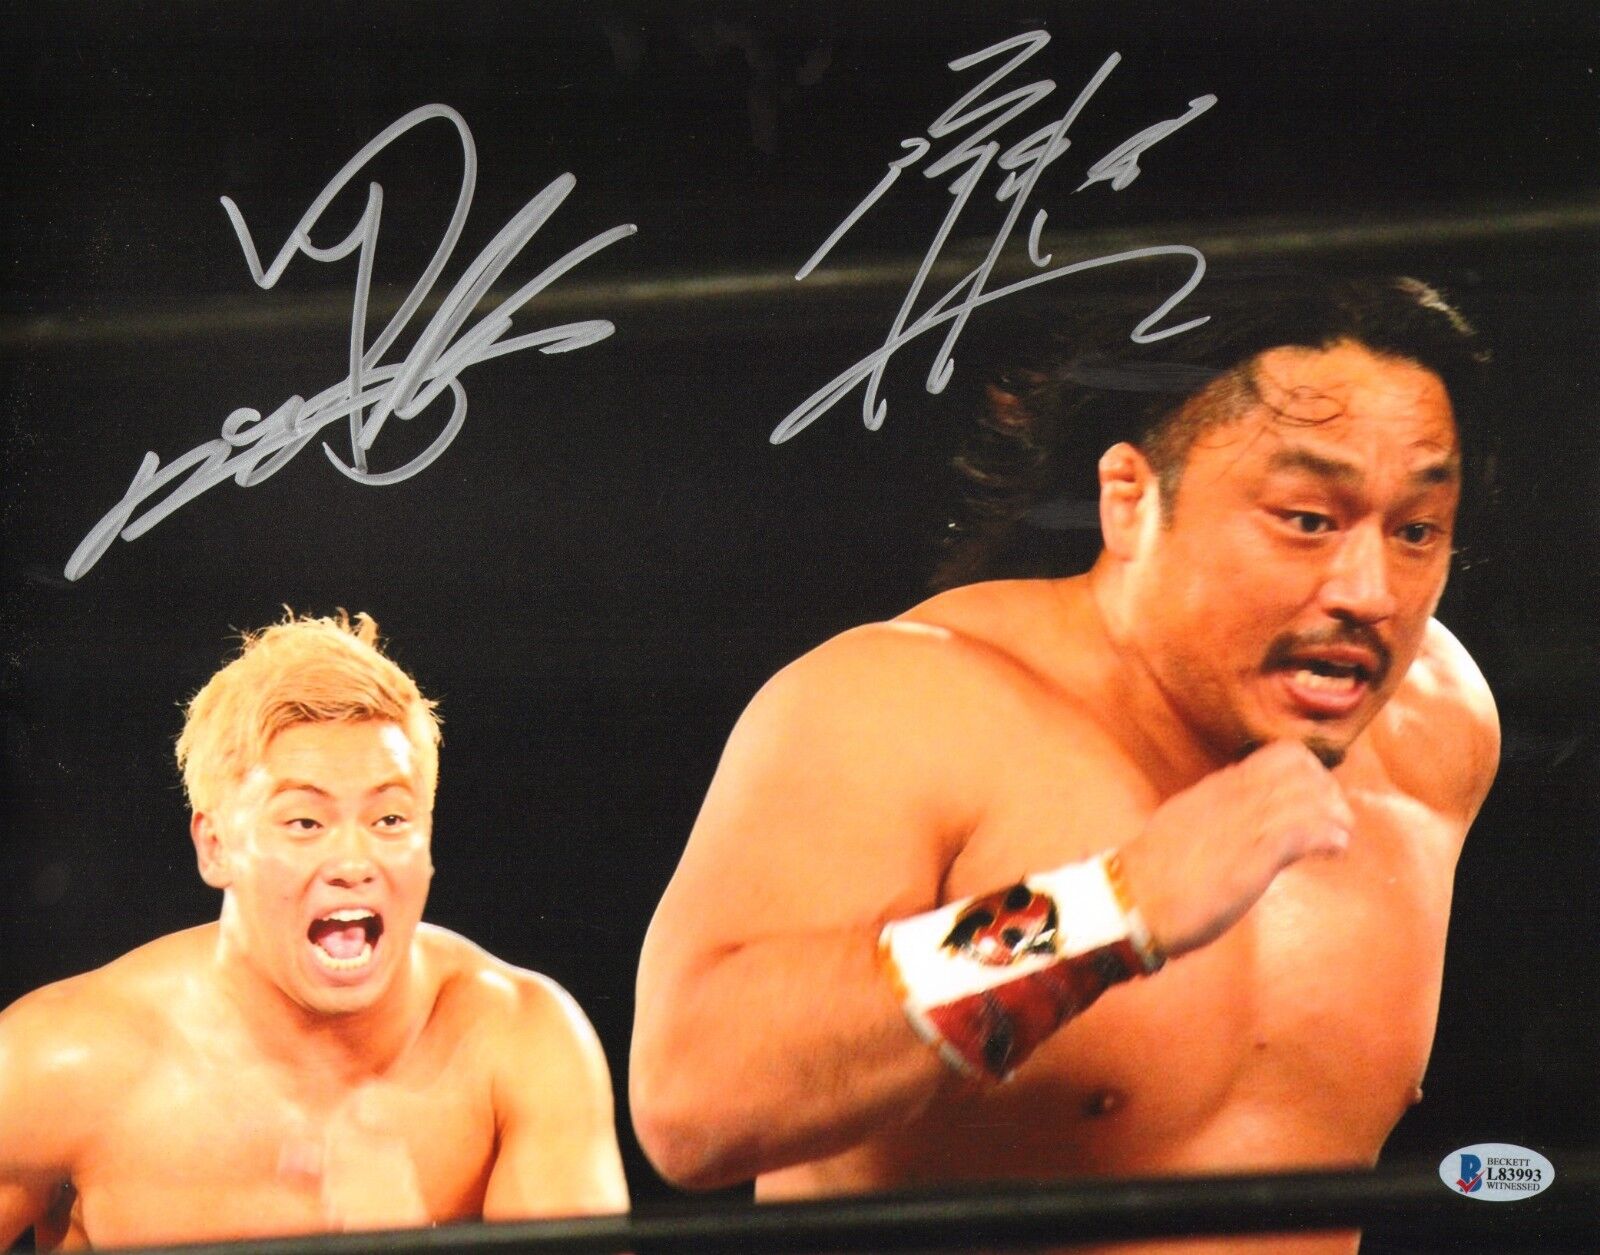 Kazuchika Okada Hirooki Goto Signed 11x14 Photo Poster painting BAS COA New Japan Pro Wrestling